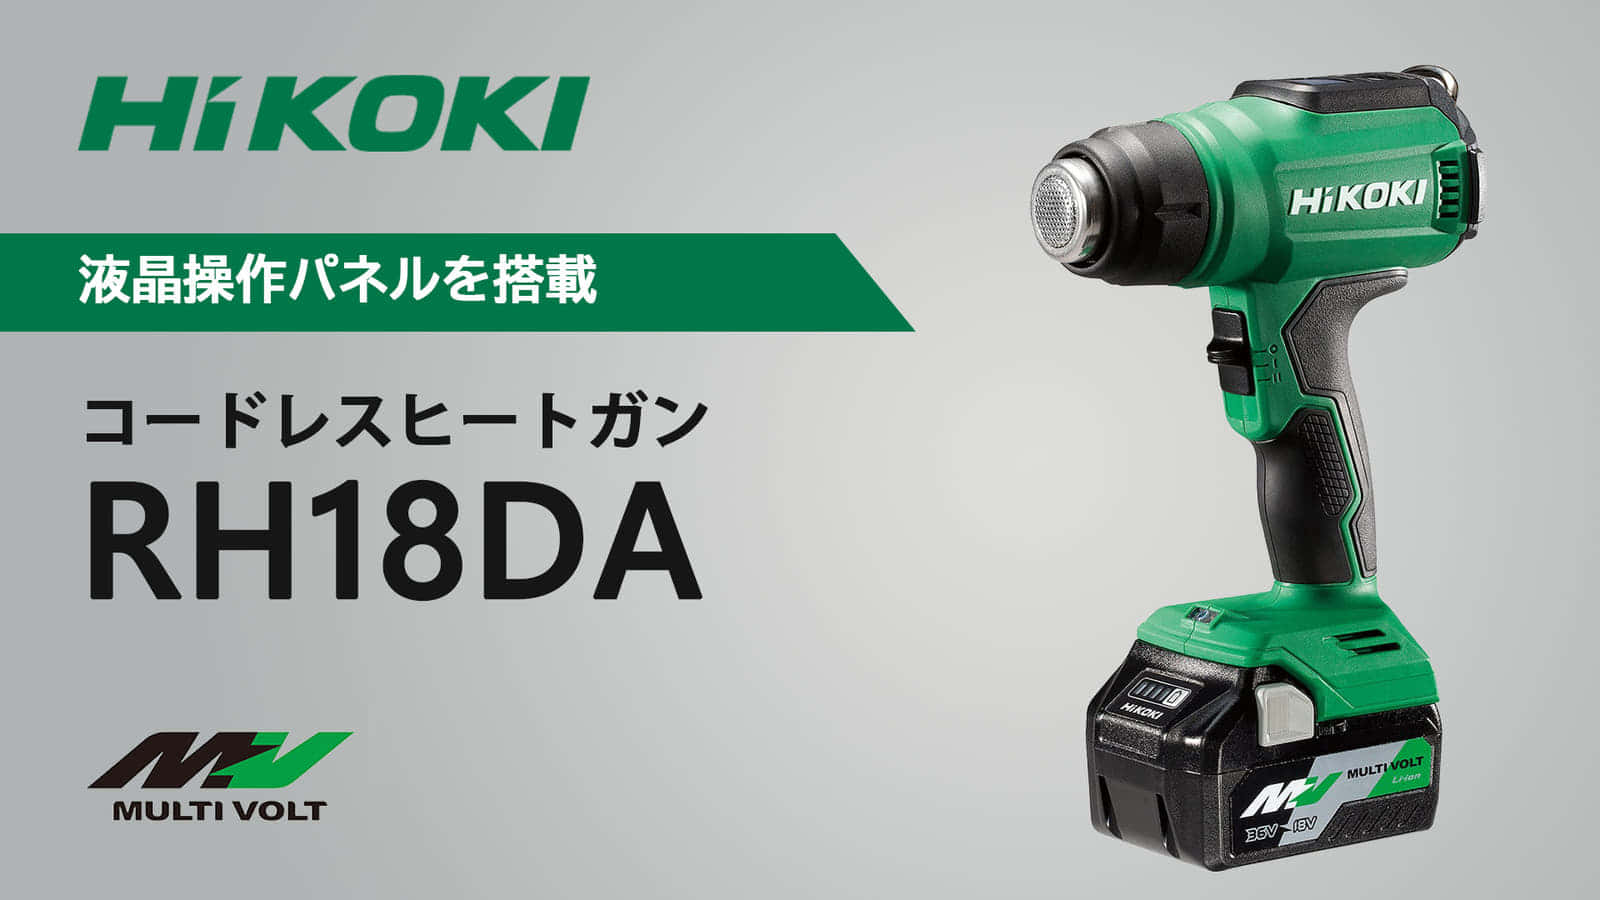 HiKOKI RH18DA コードレスヒートガンを発売、温度550度・風量300L/min